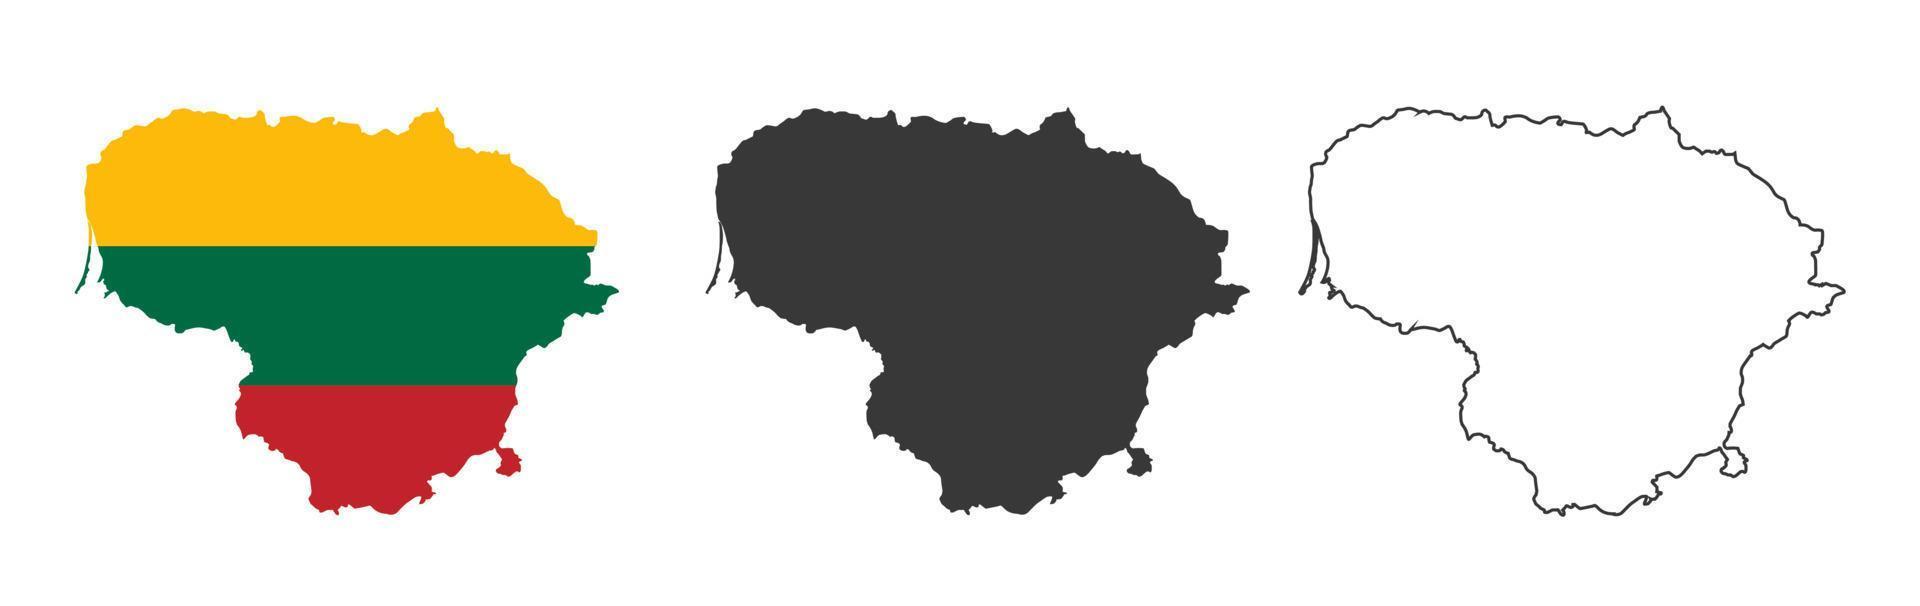 plantilla de diseño vectorial de mapas de lituania. vector